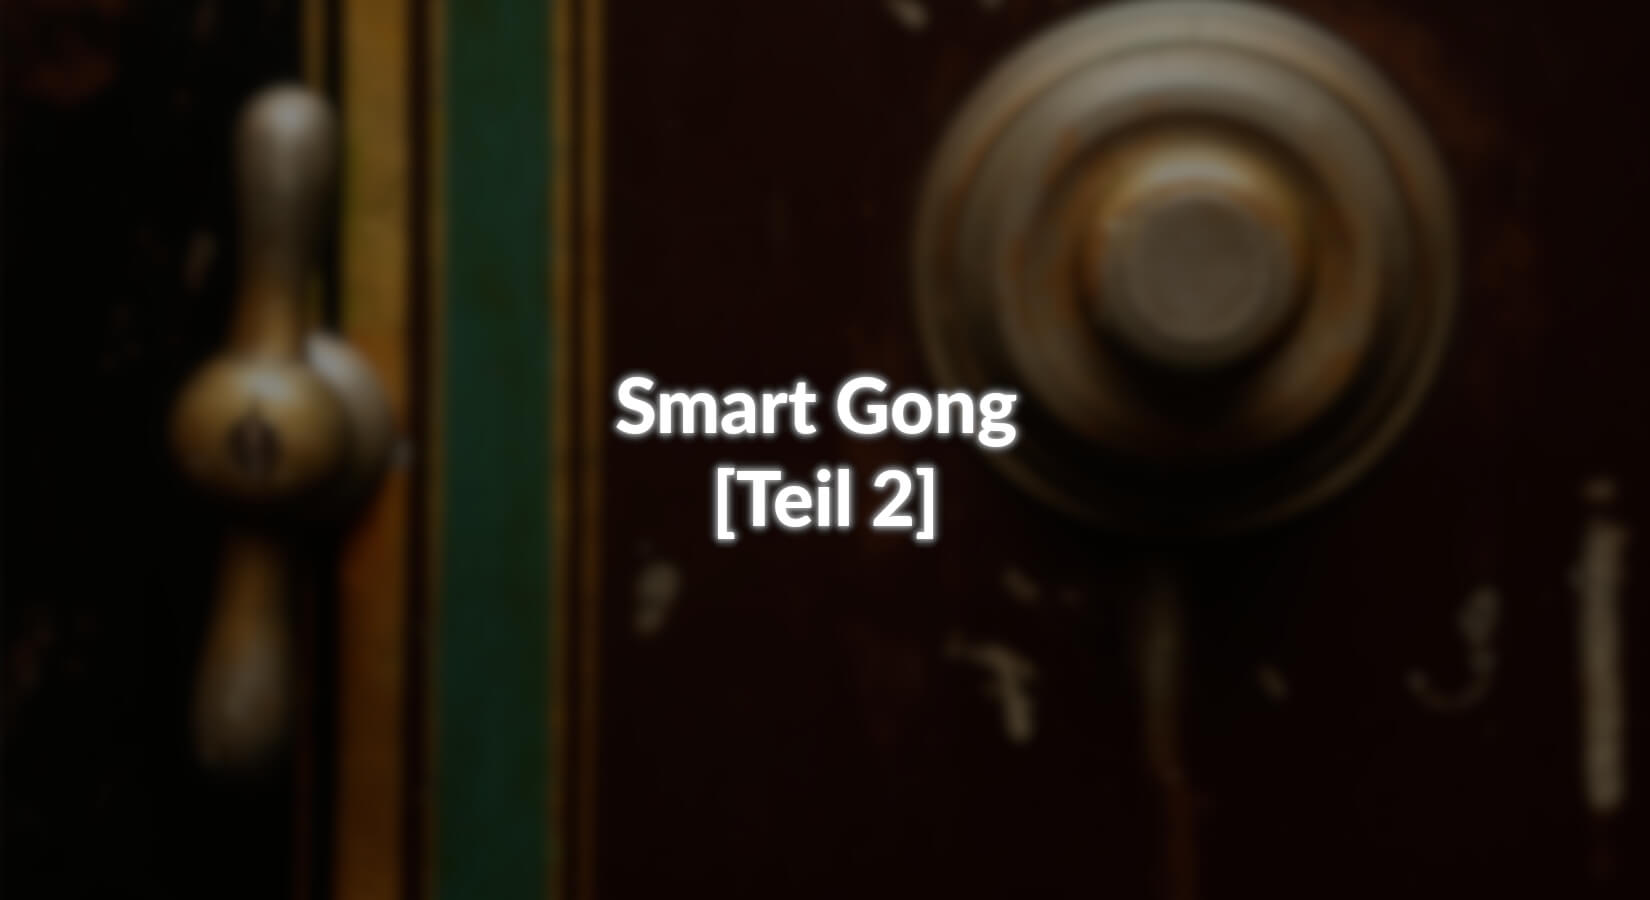 Smart Gong - [Teil 2] - AZ-Delivery